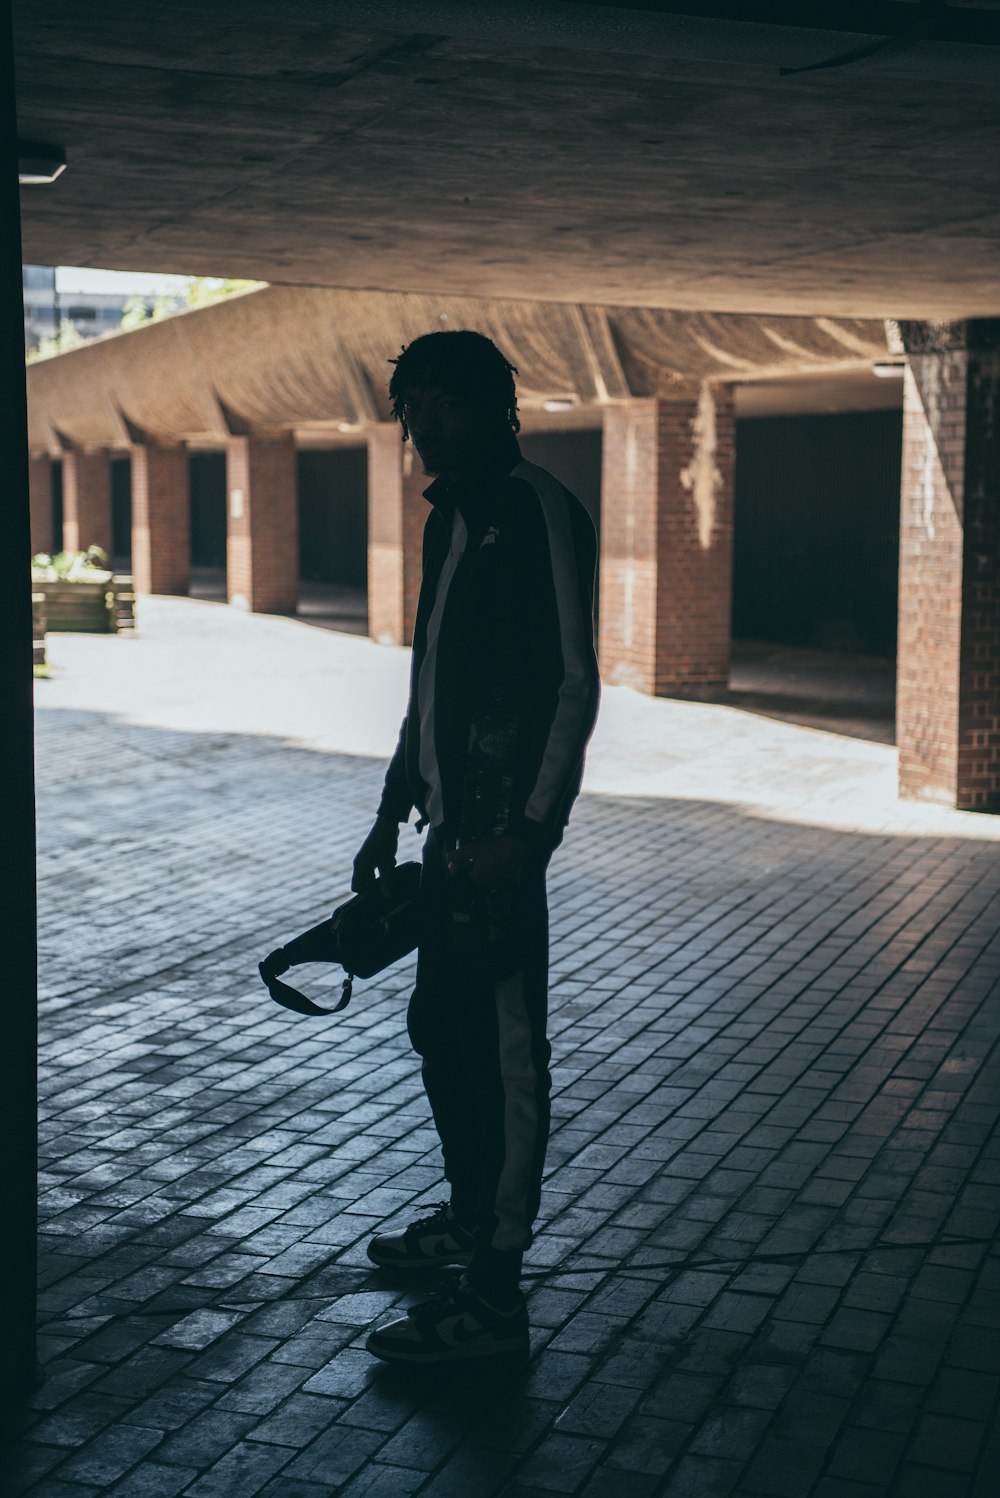 a man holding a skateboard in a parking garage